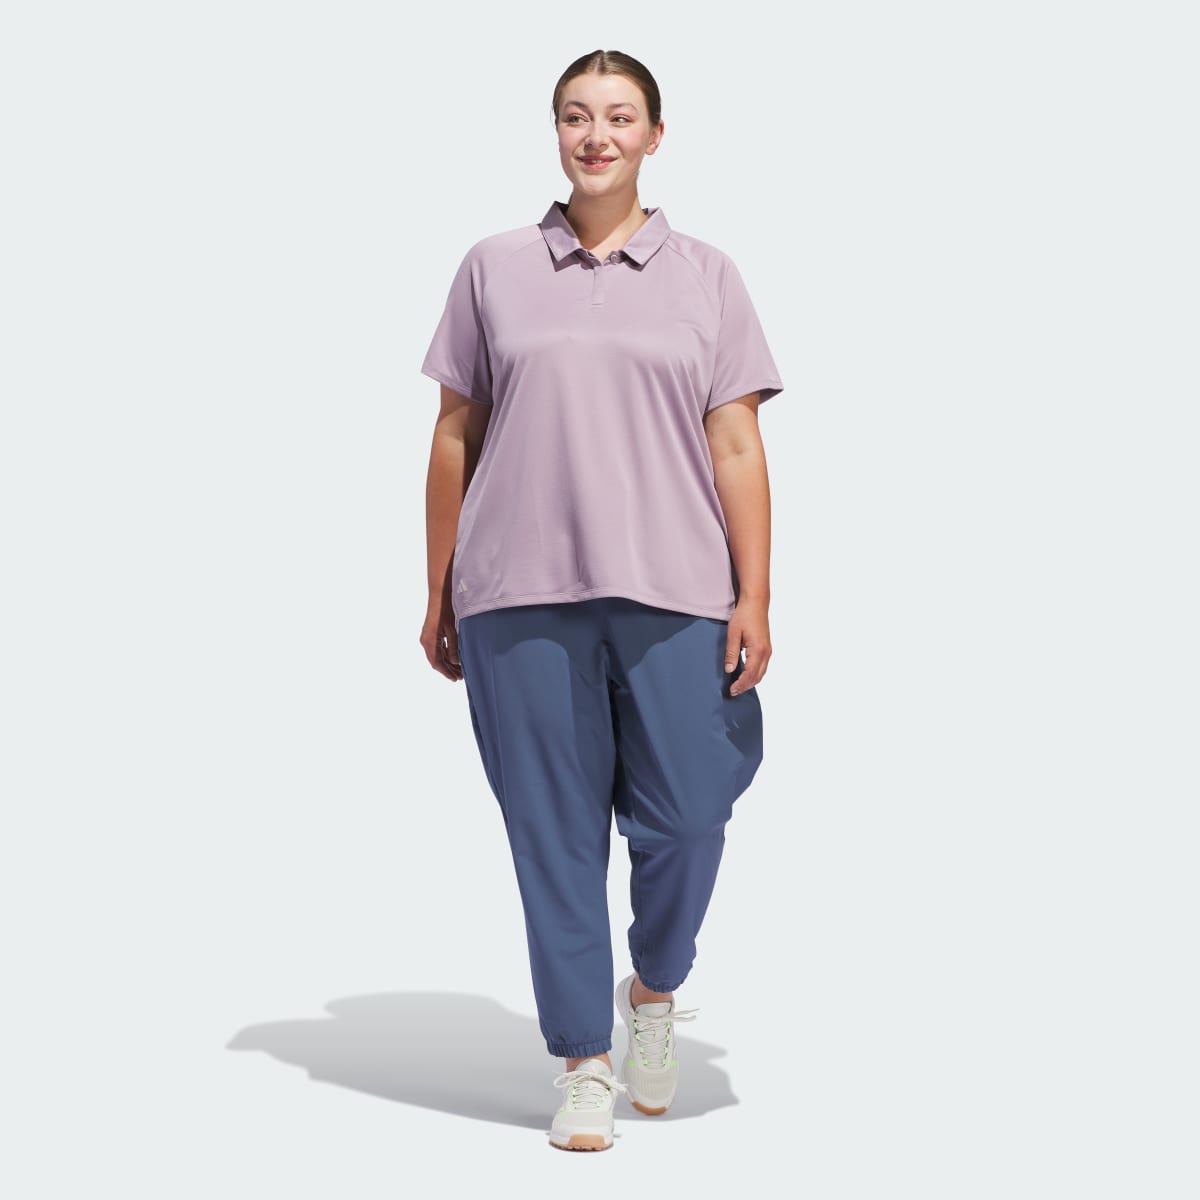 Adidas Women's Ultimate365 HEAT.RDY Polo Shirt (Plus Size). 5